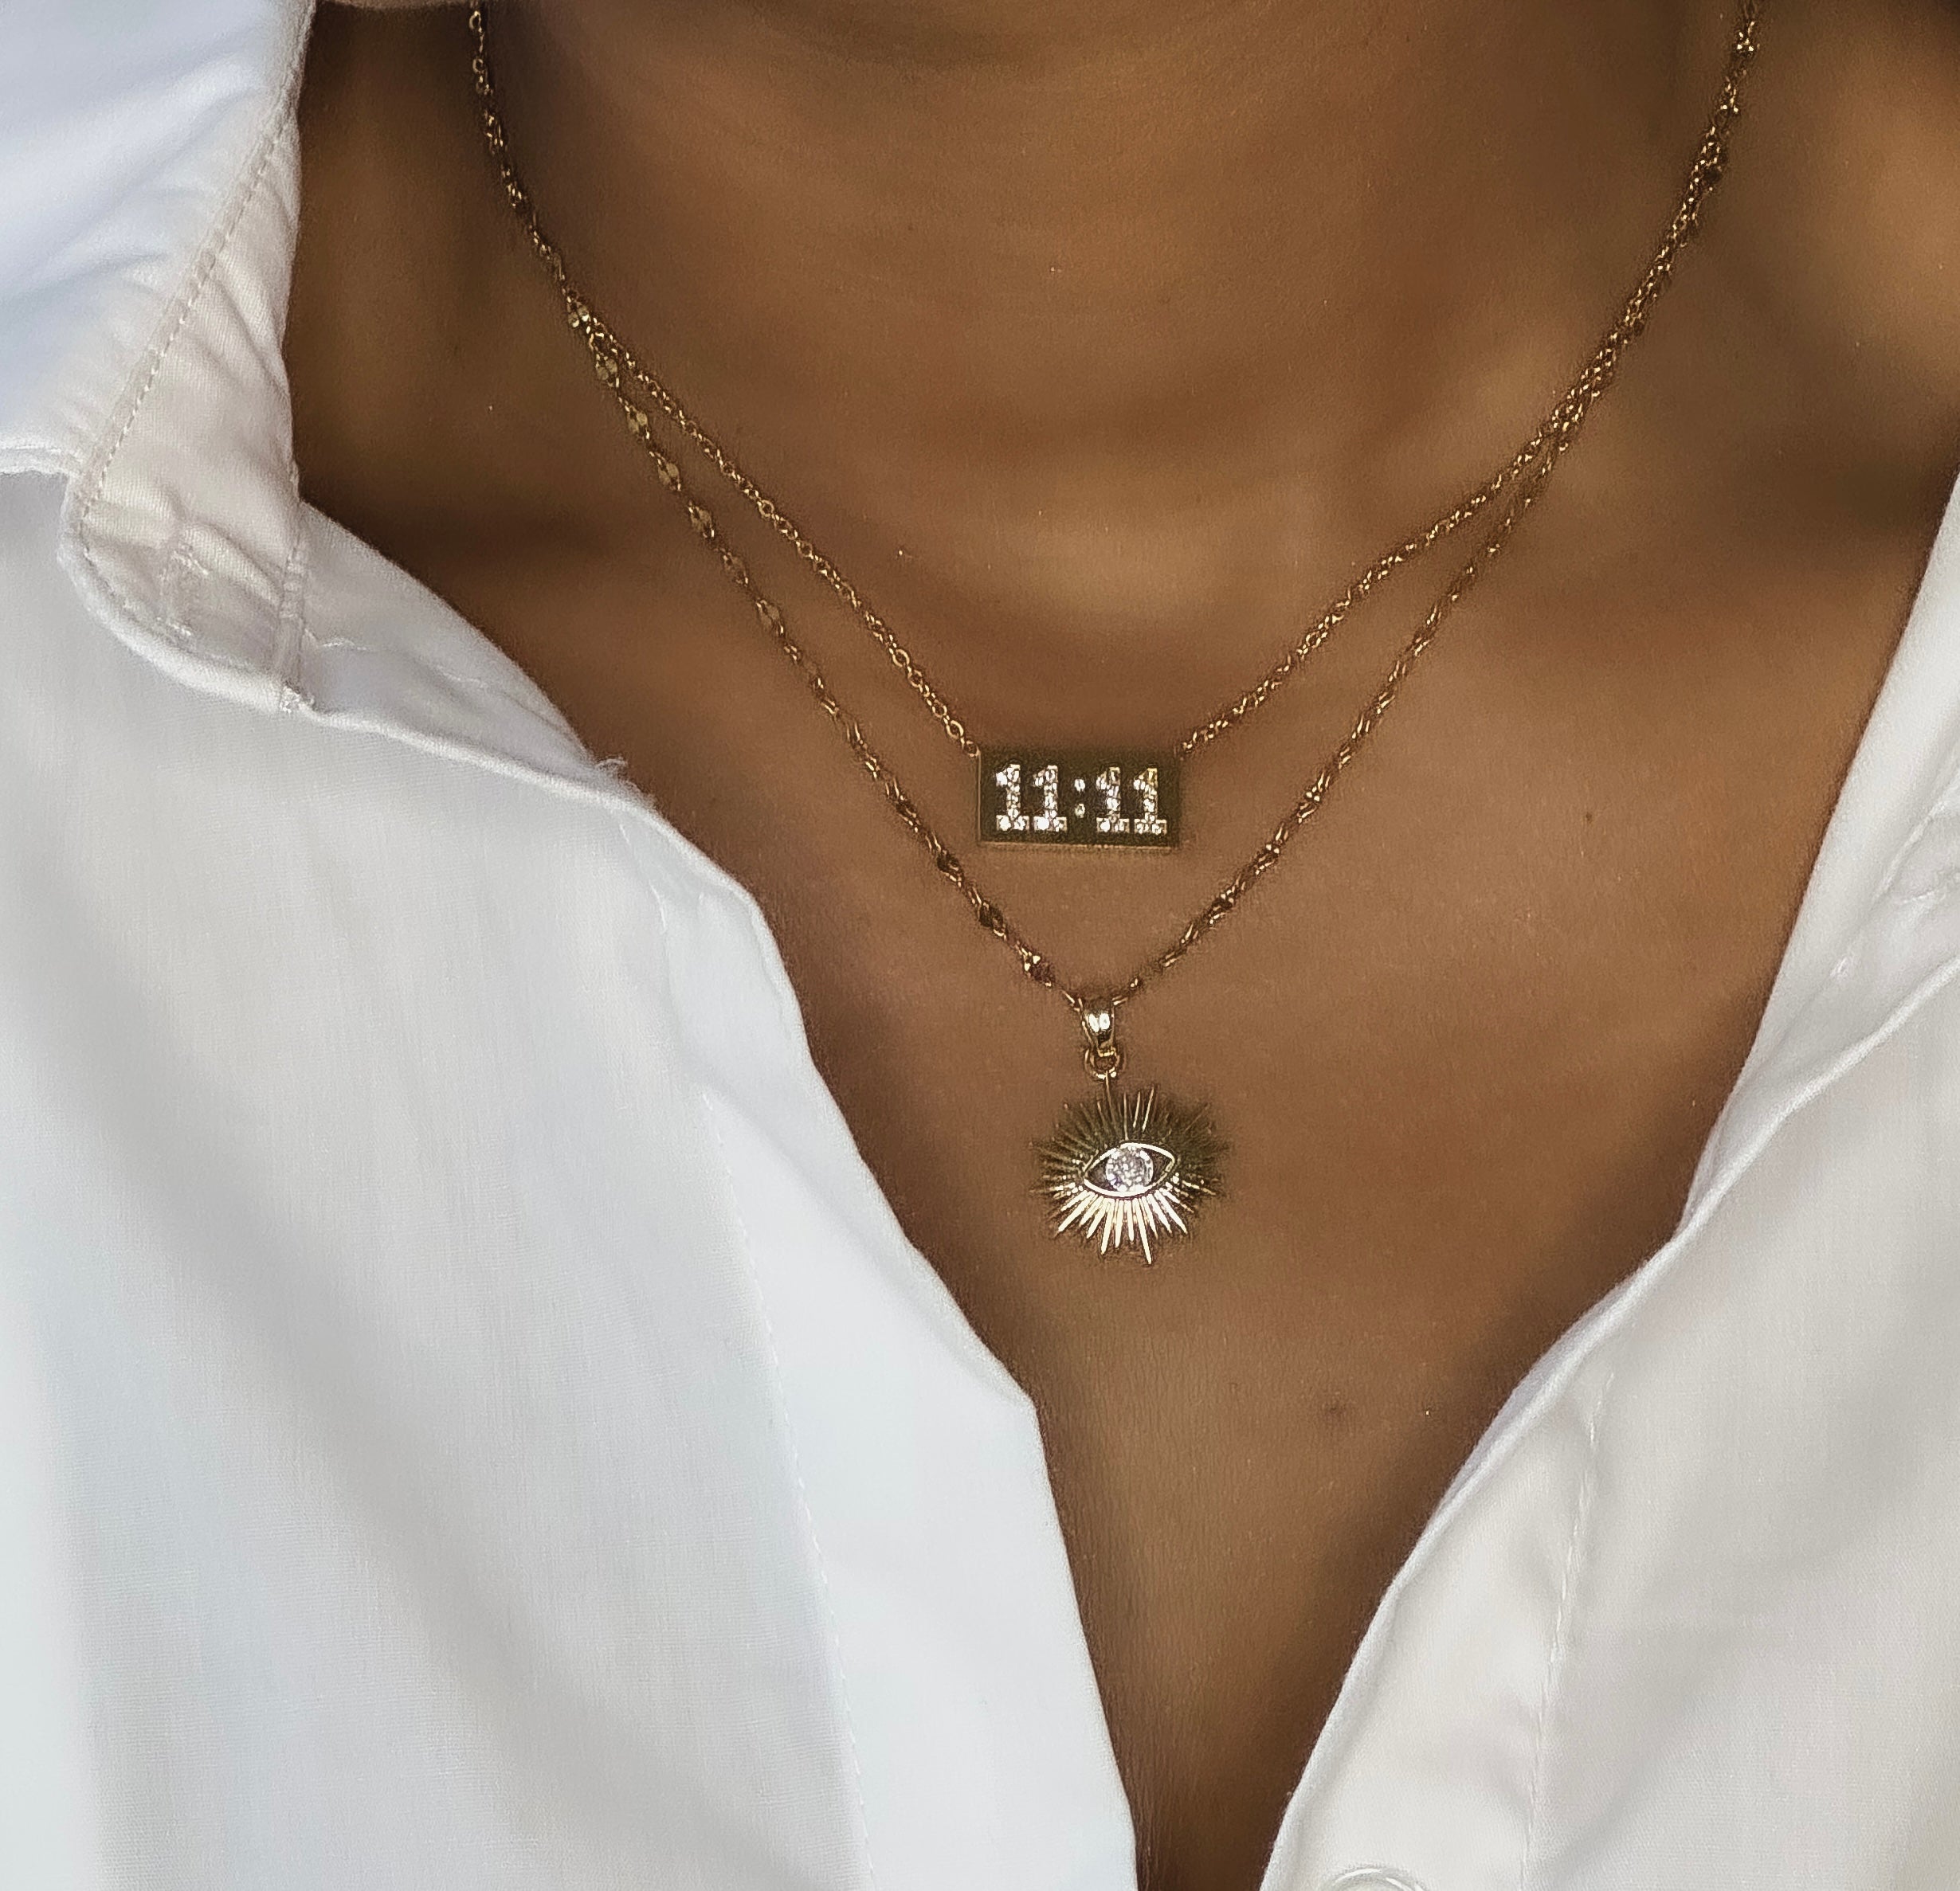 Tasha 11:11 Zircon Necklace - Alais Branche